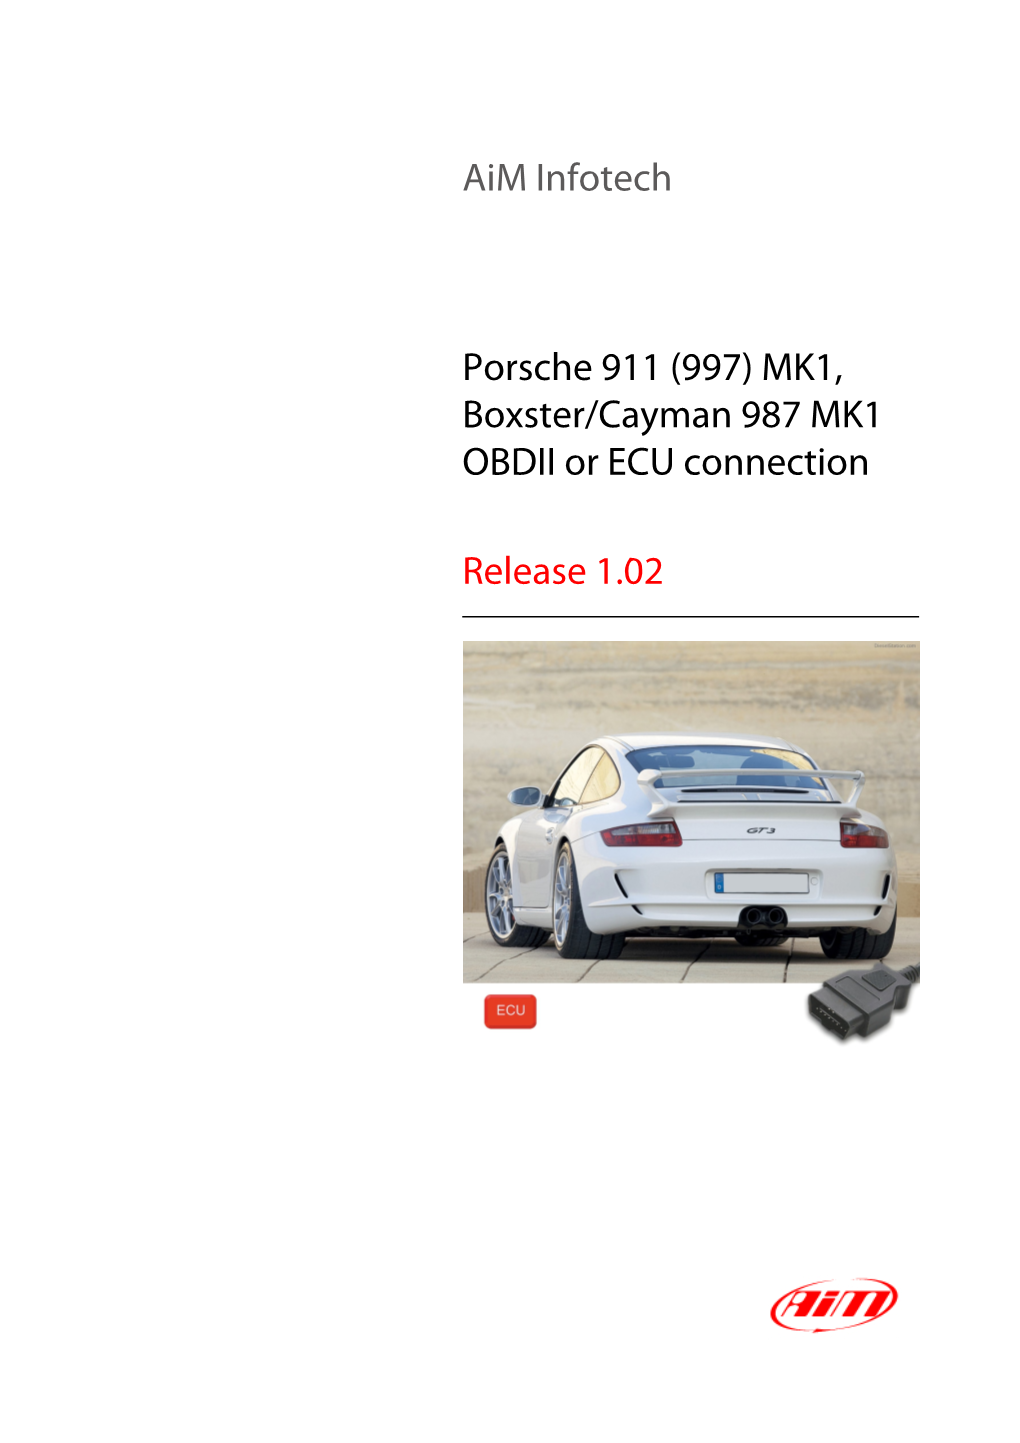 Aim Infotech Porsche 911 (997) MK1, Boxster/Cayman 987 MK1 OBDII Or ECU Connection Release 1.02